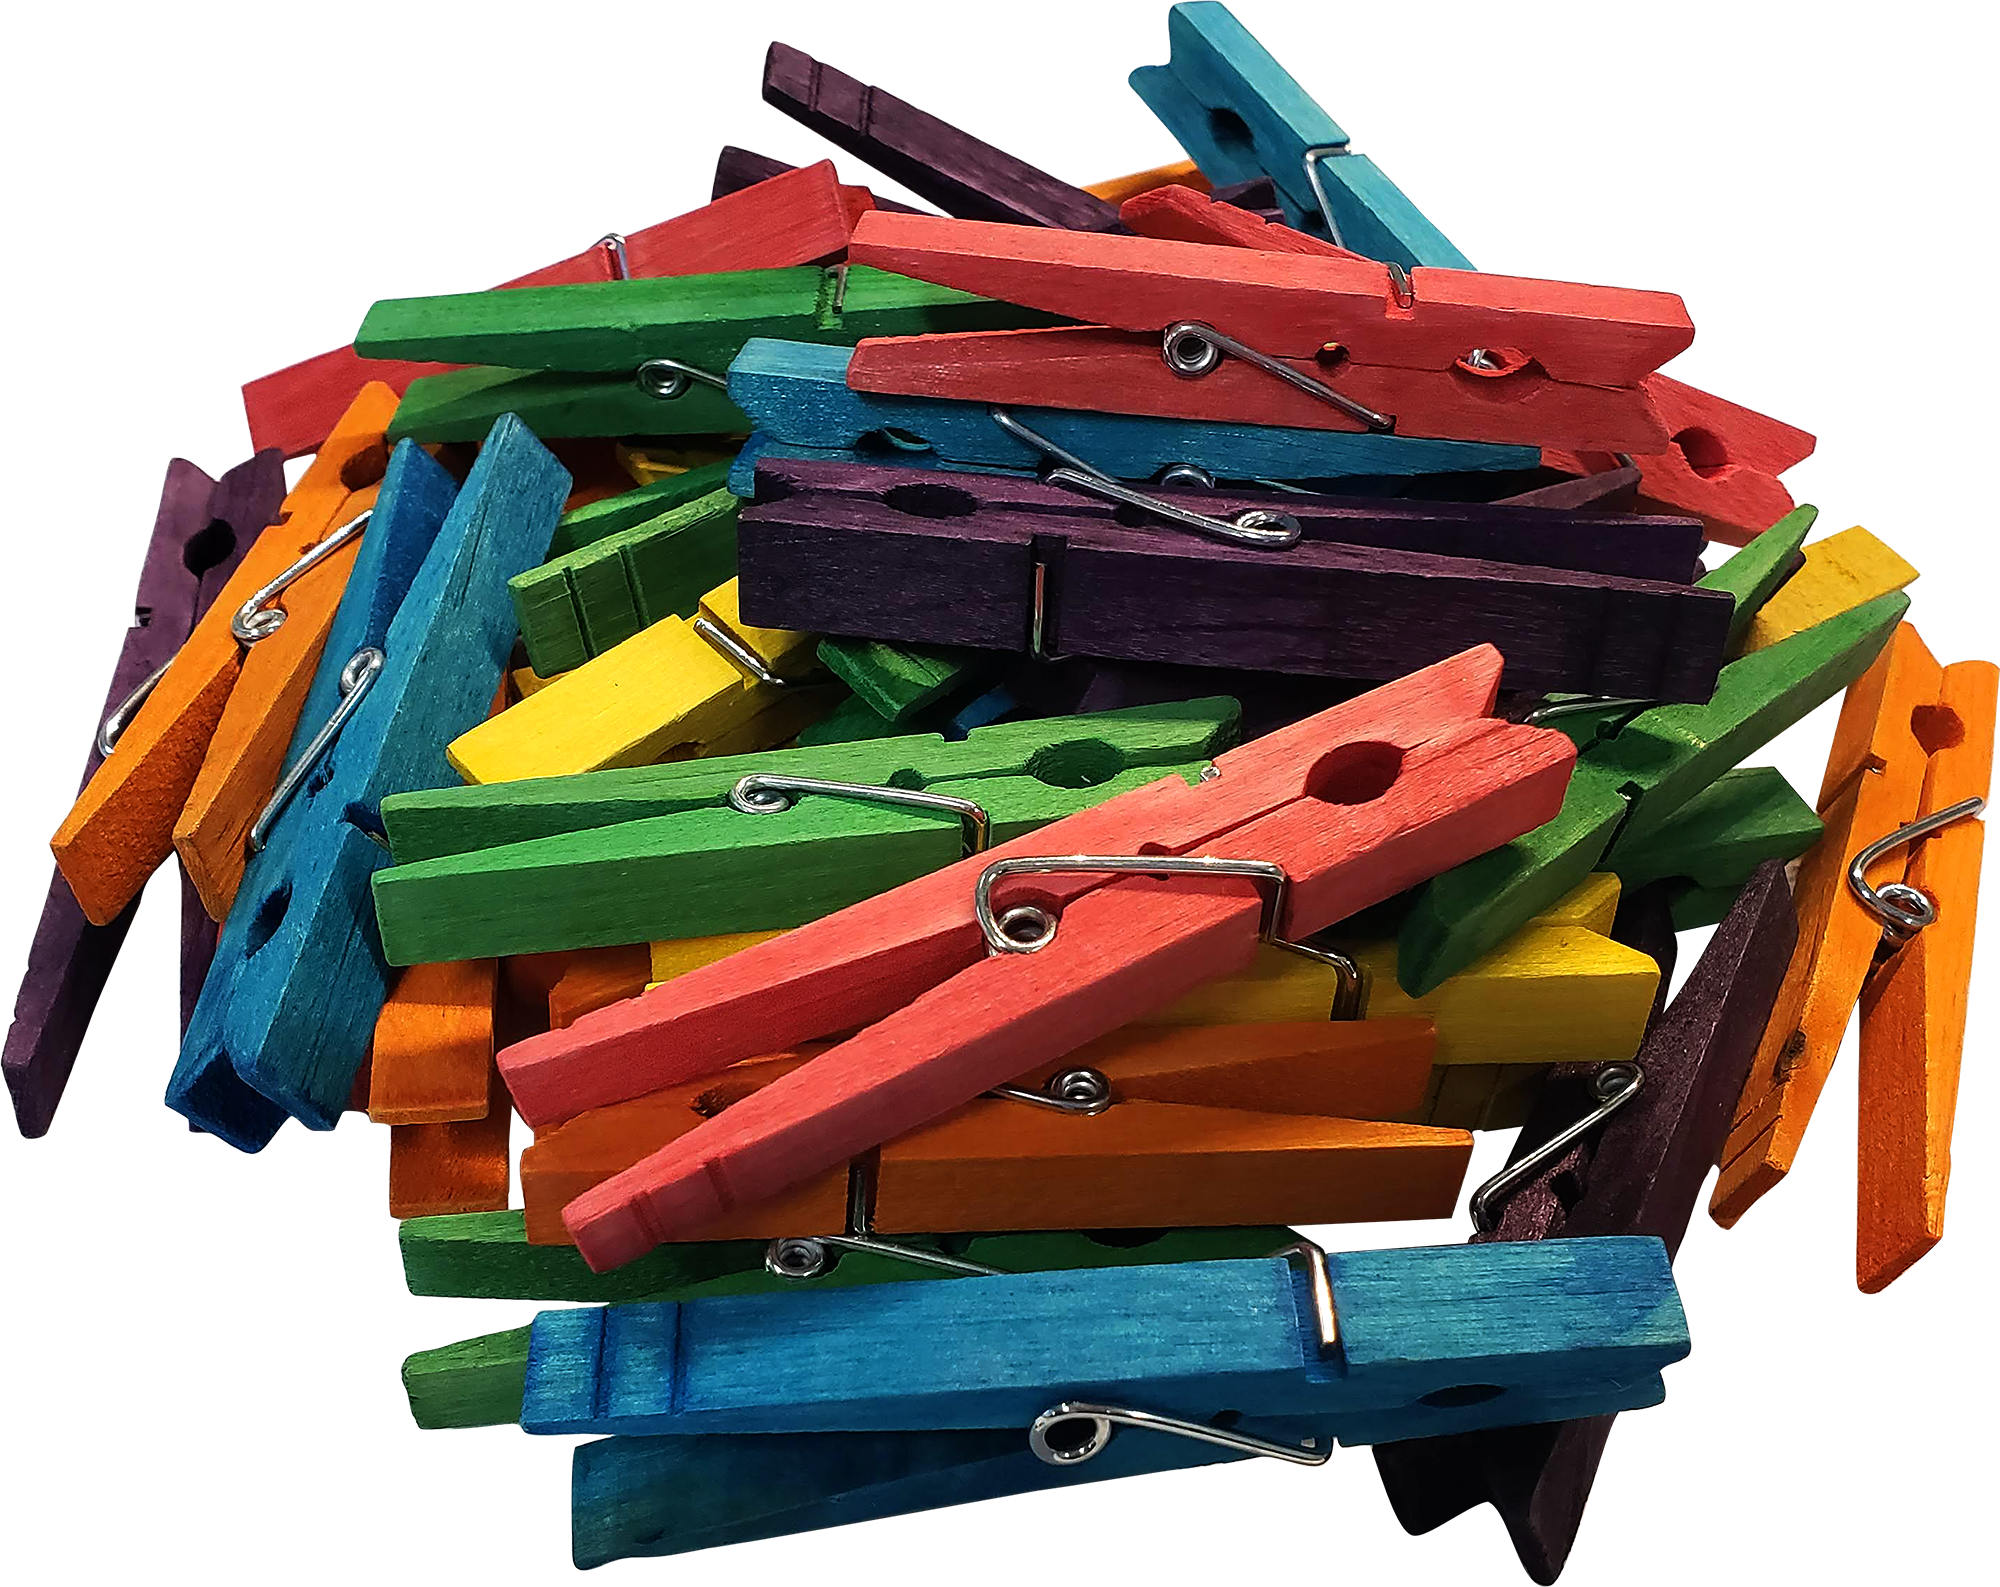 STEM Basics: Multicolor Clothespins - 50 Count